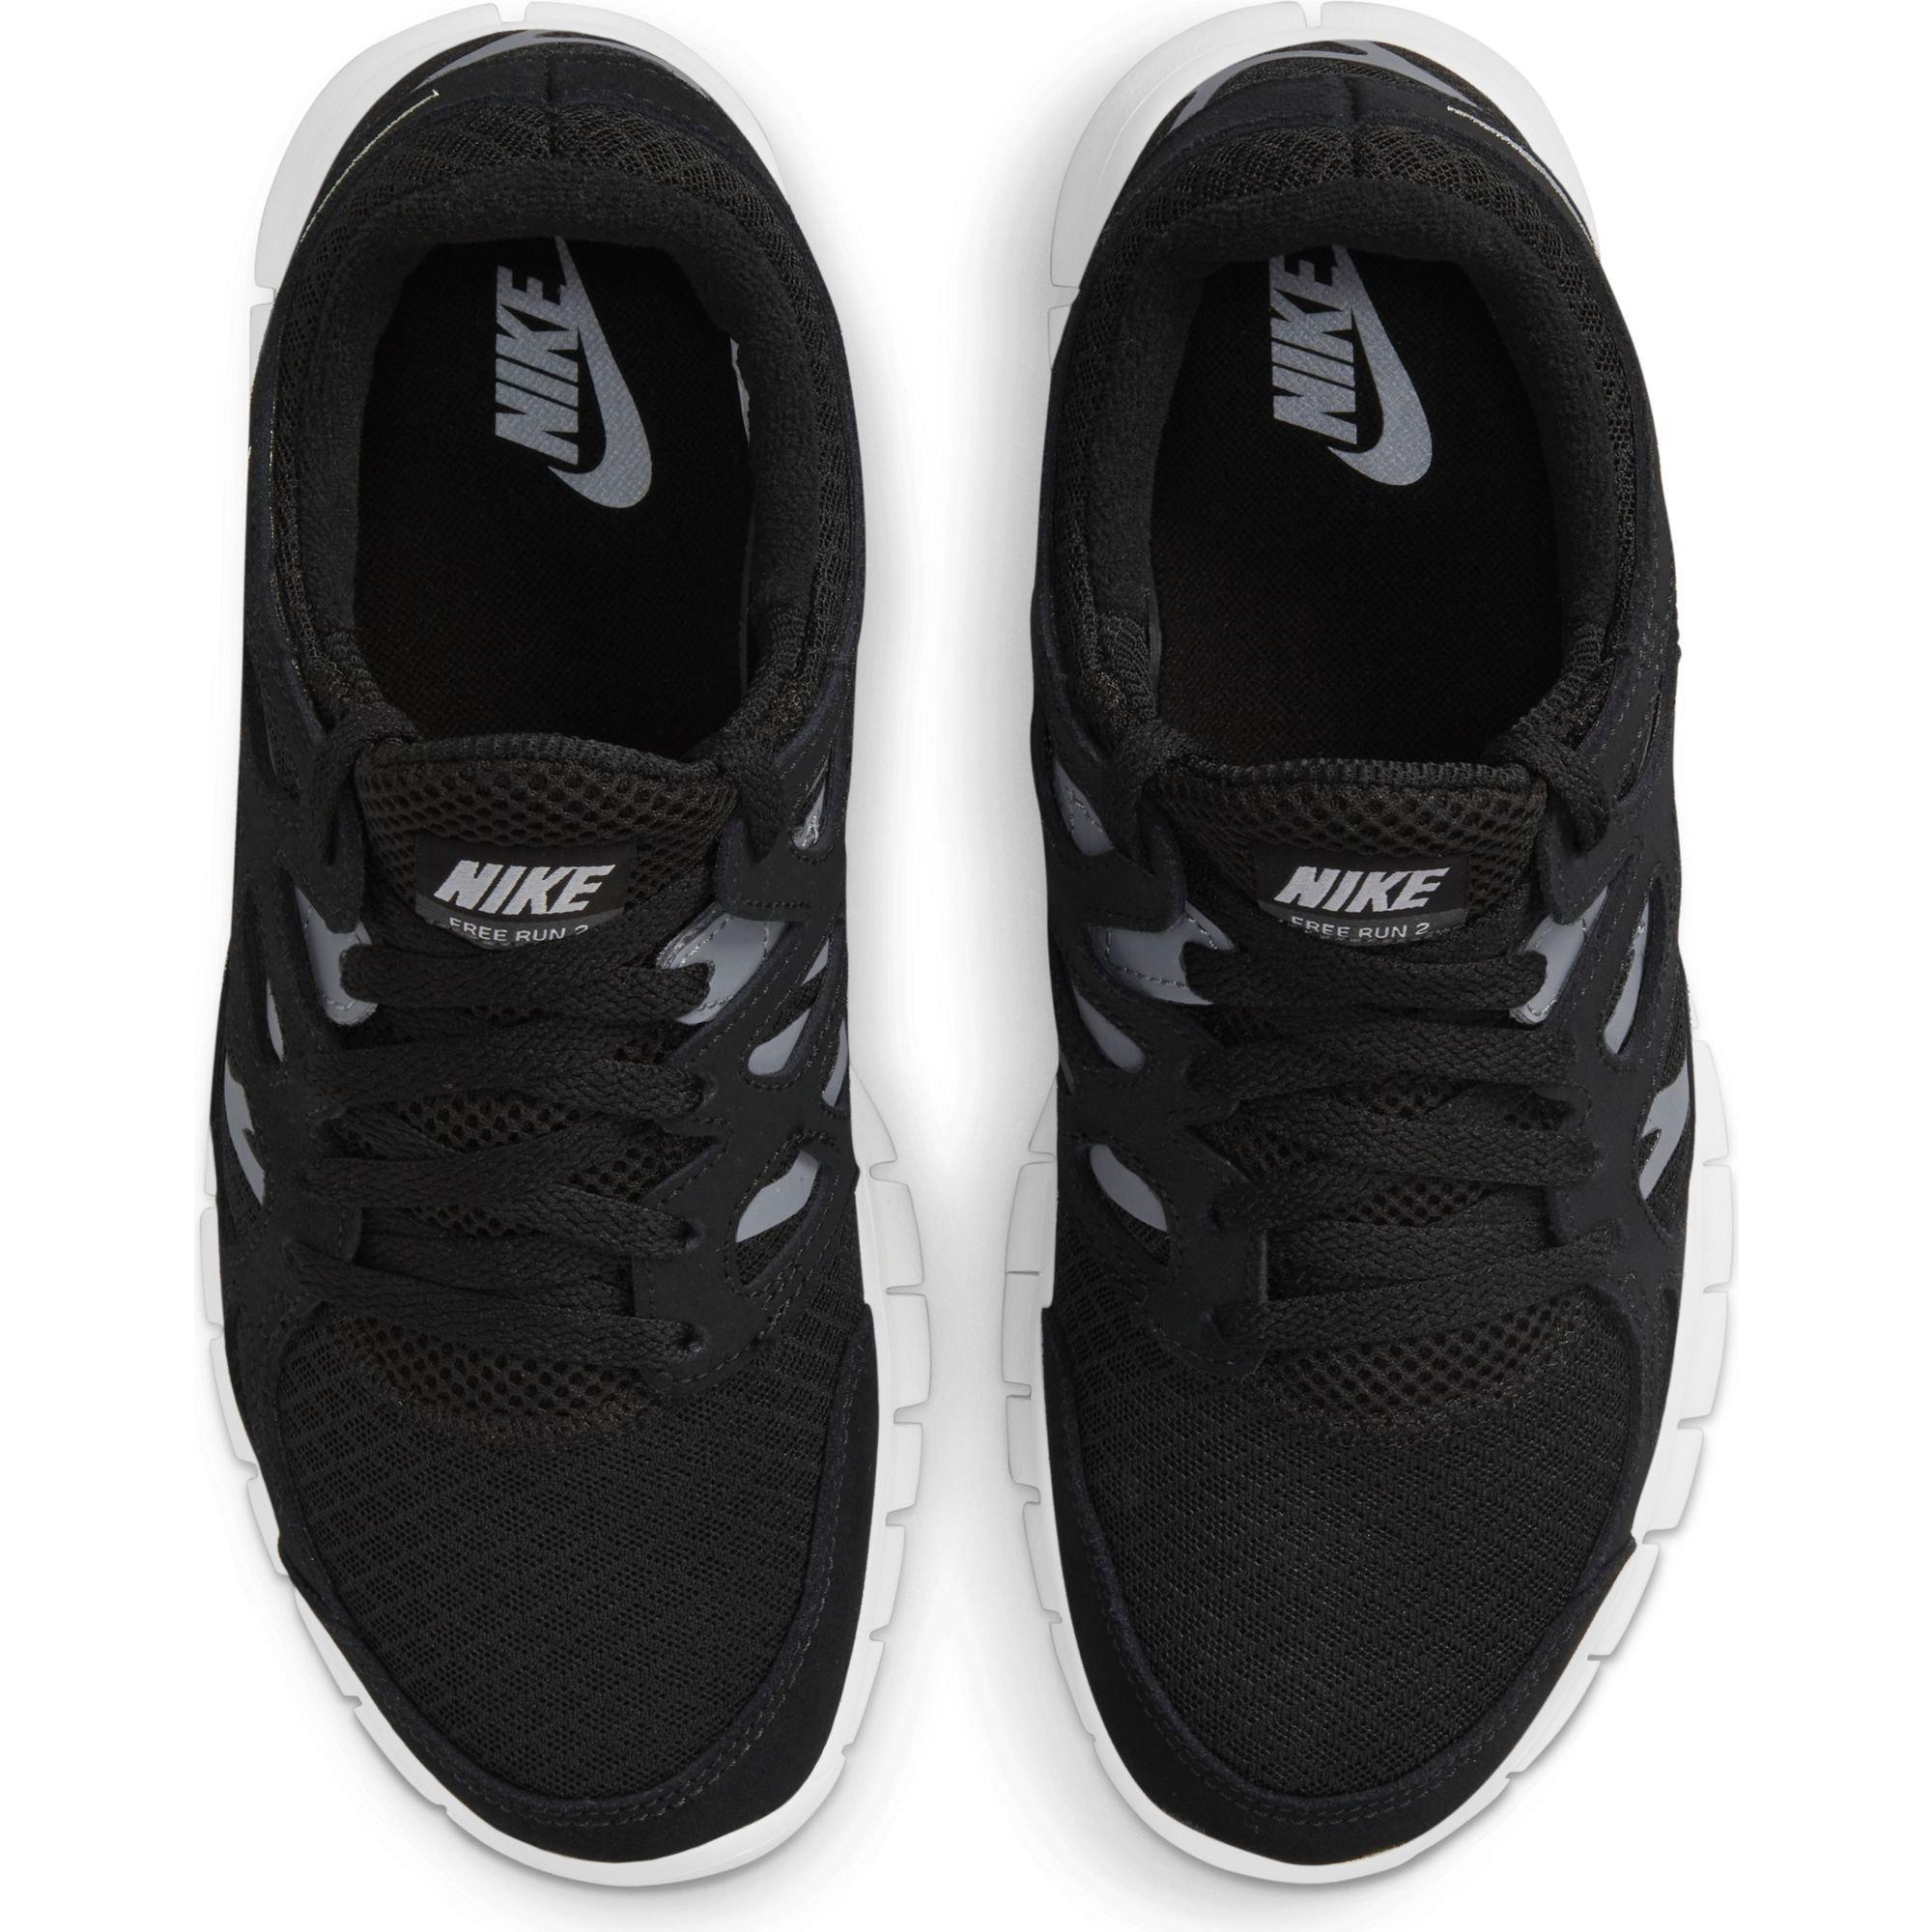 Nike Free Run 2 "Black/White" Women's Shoe